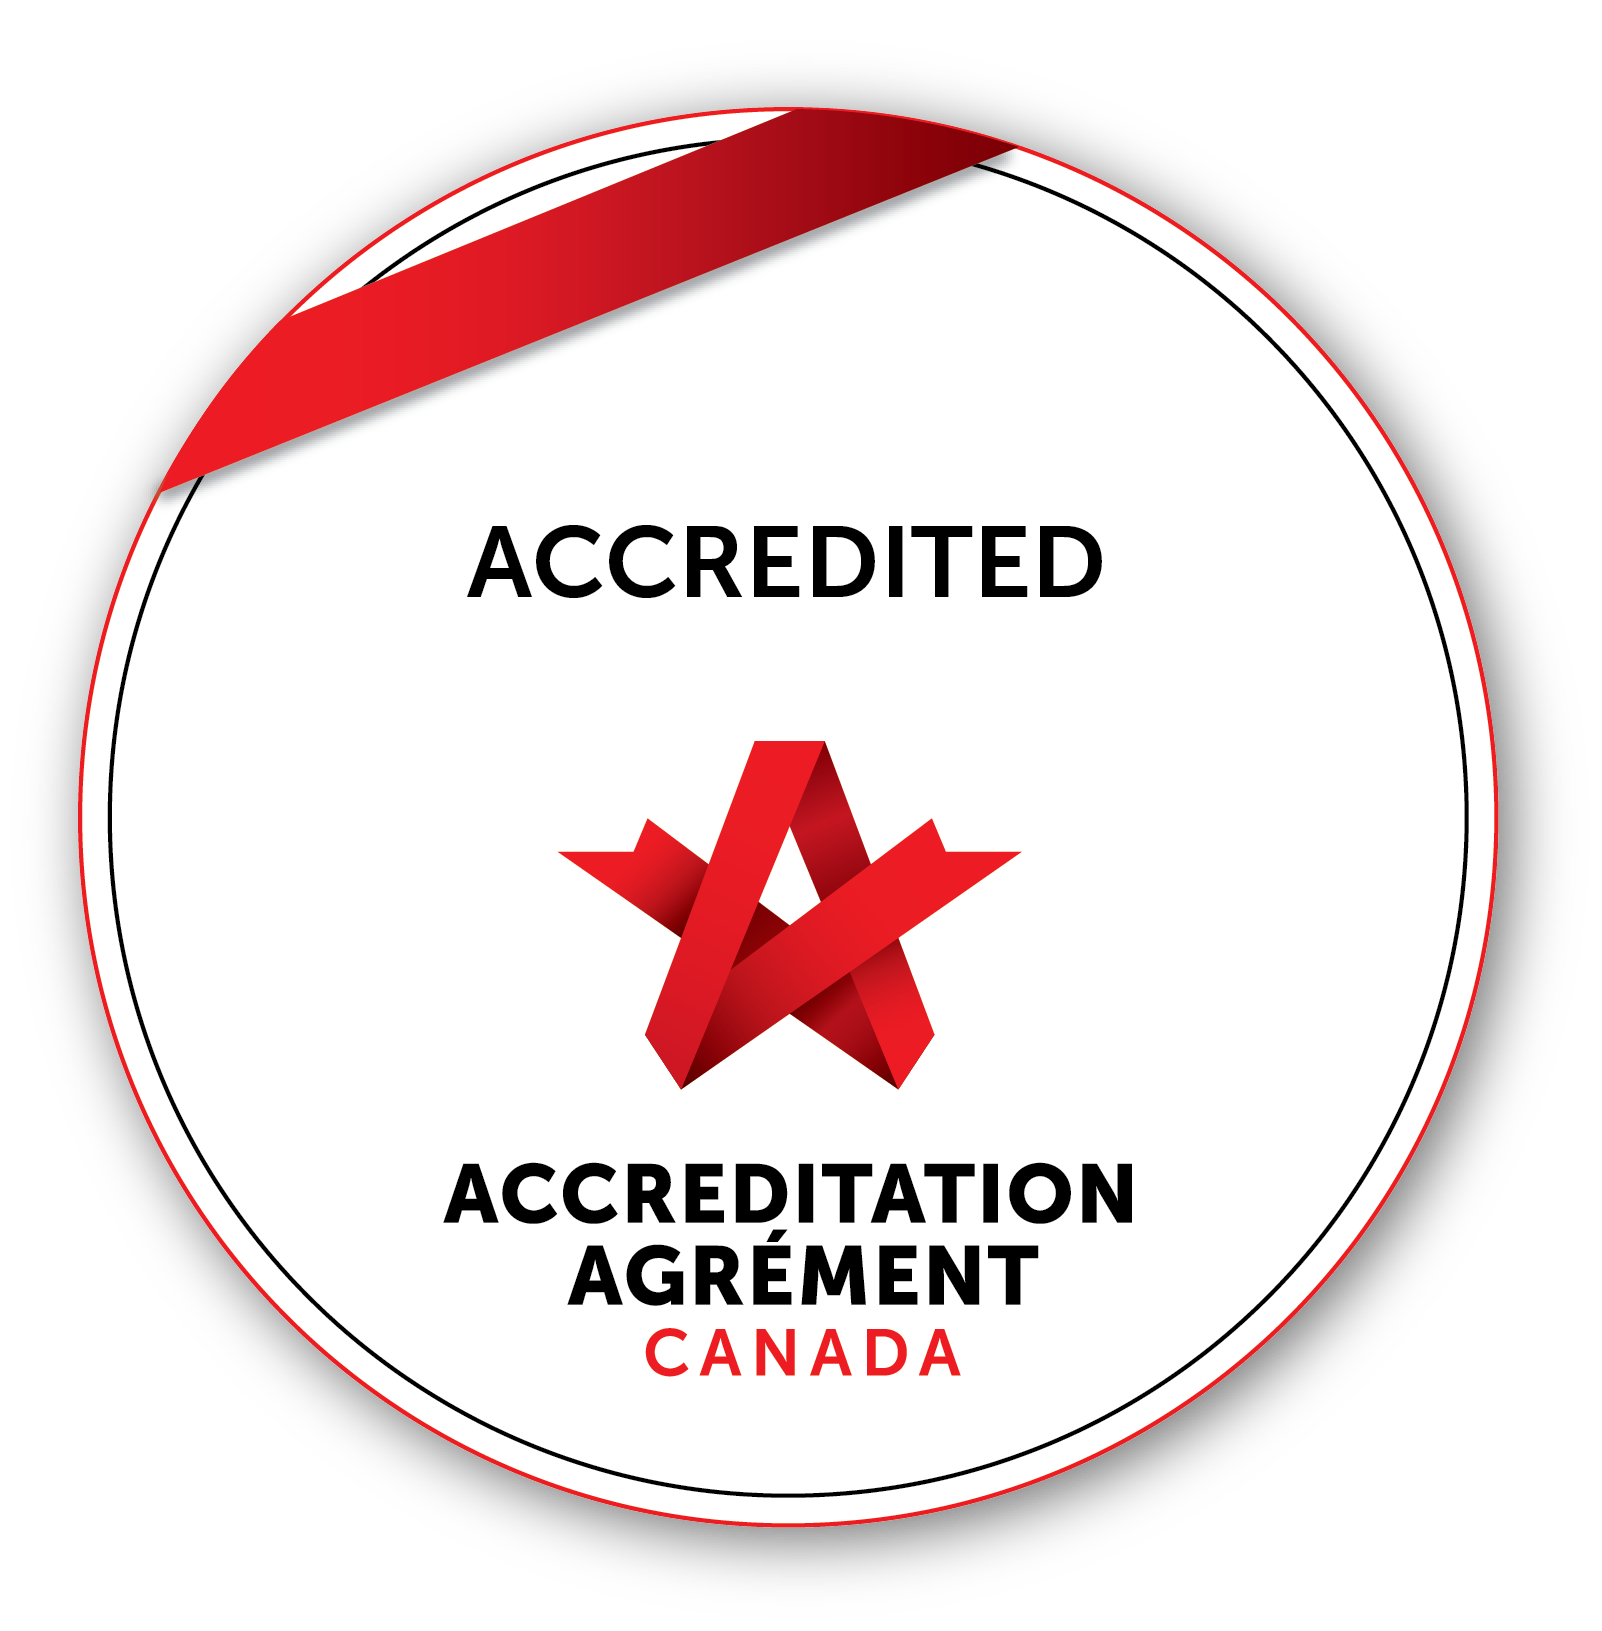 Accreditation Primer Award